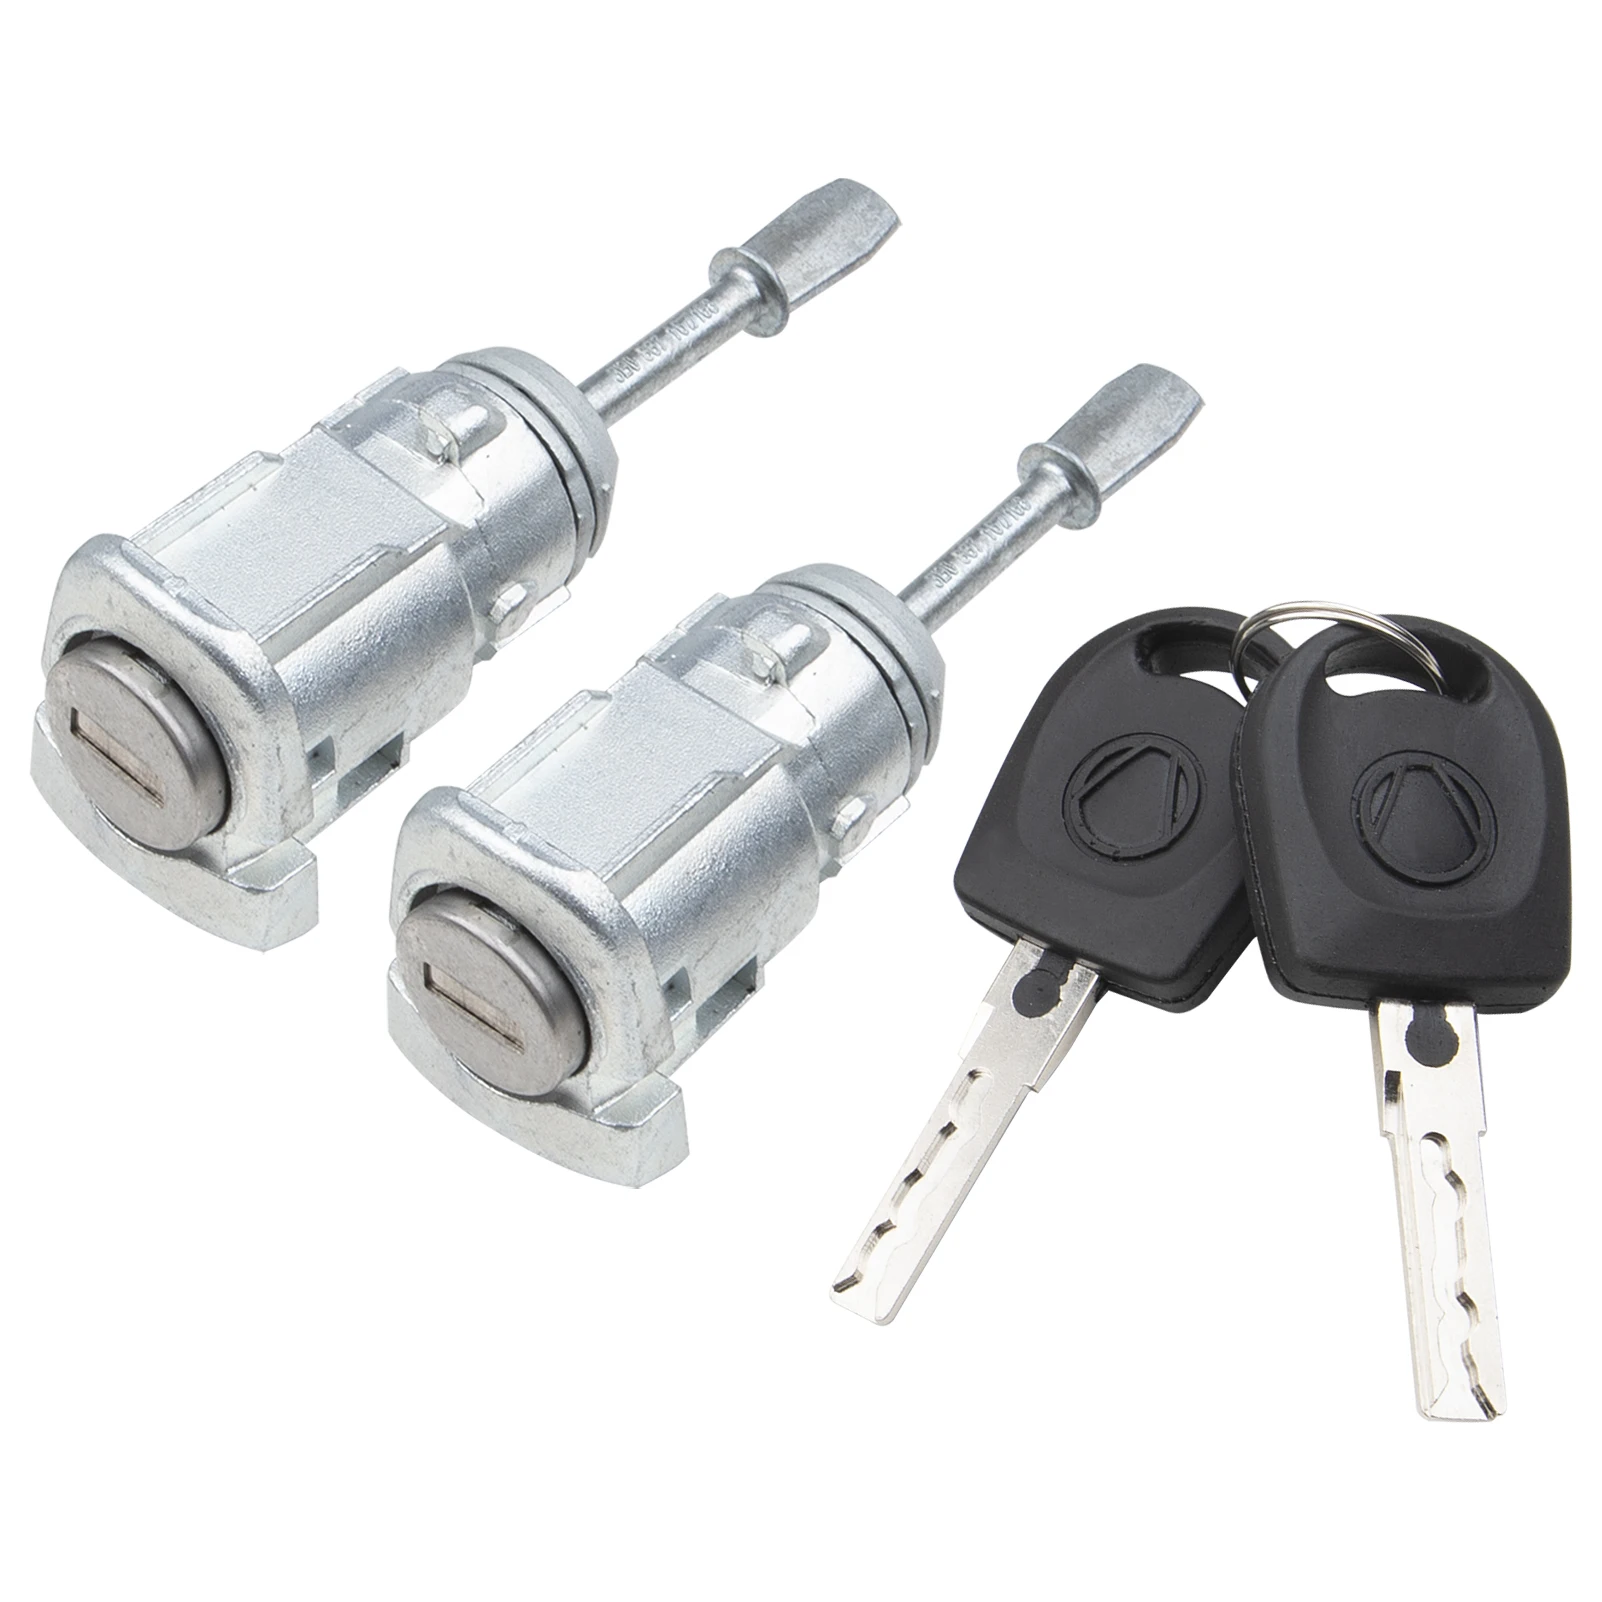 

2 Pcs Front Right Passenger Side Door Lock Cylinder With 2 Keys For VW Passat B5 1996-2006 Seat LEON 1999-2006 3B0837168